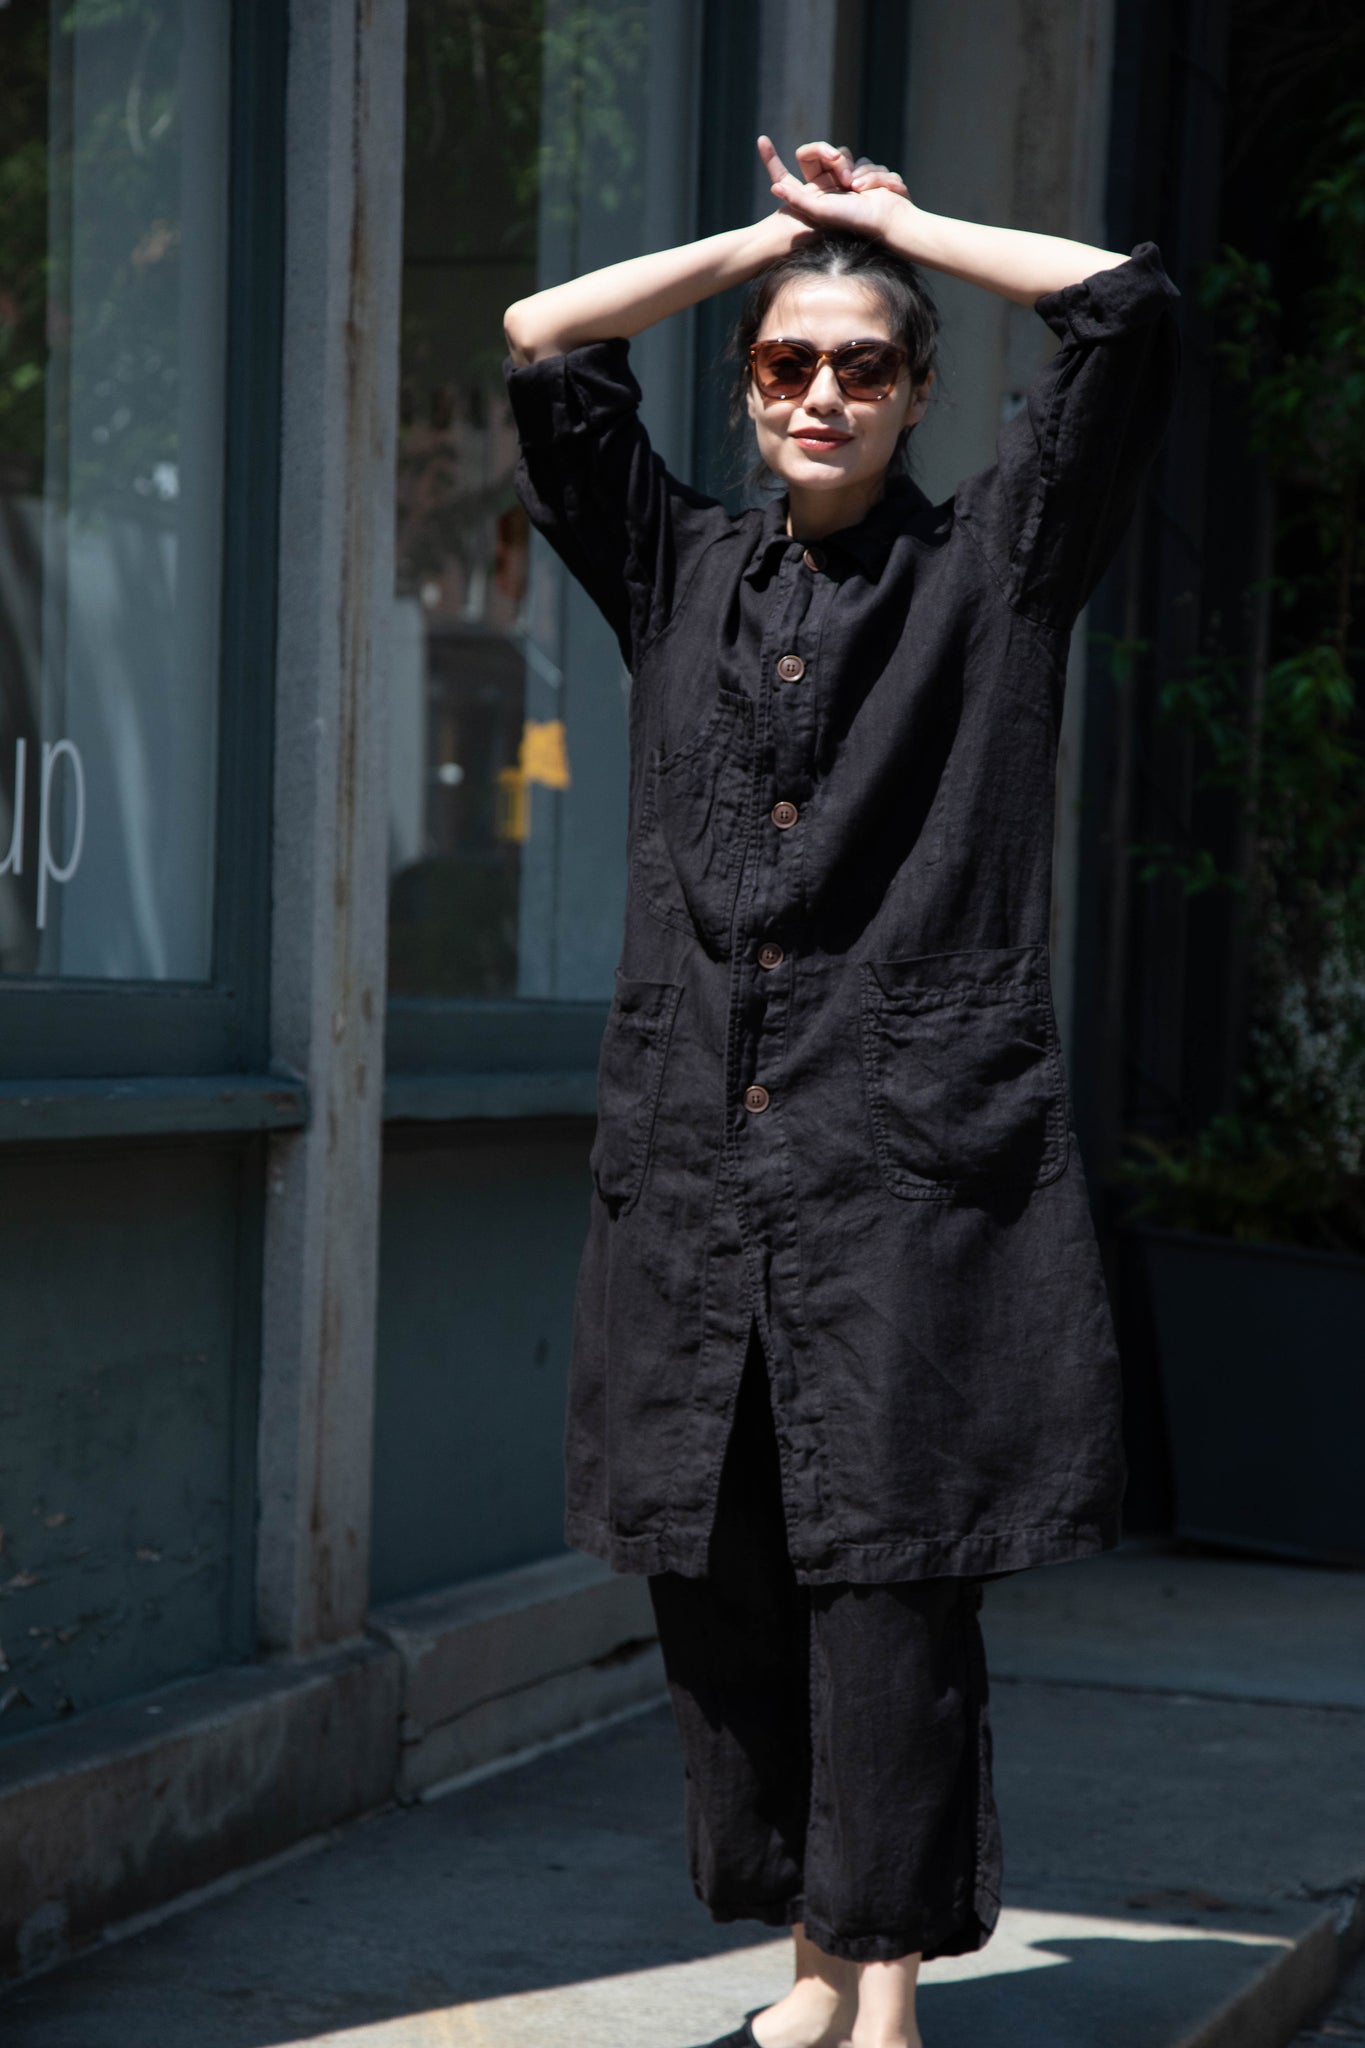 Armen | Work Coat in Black Twill Linen